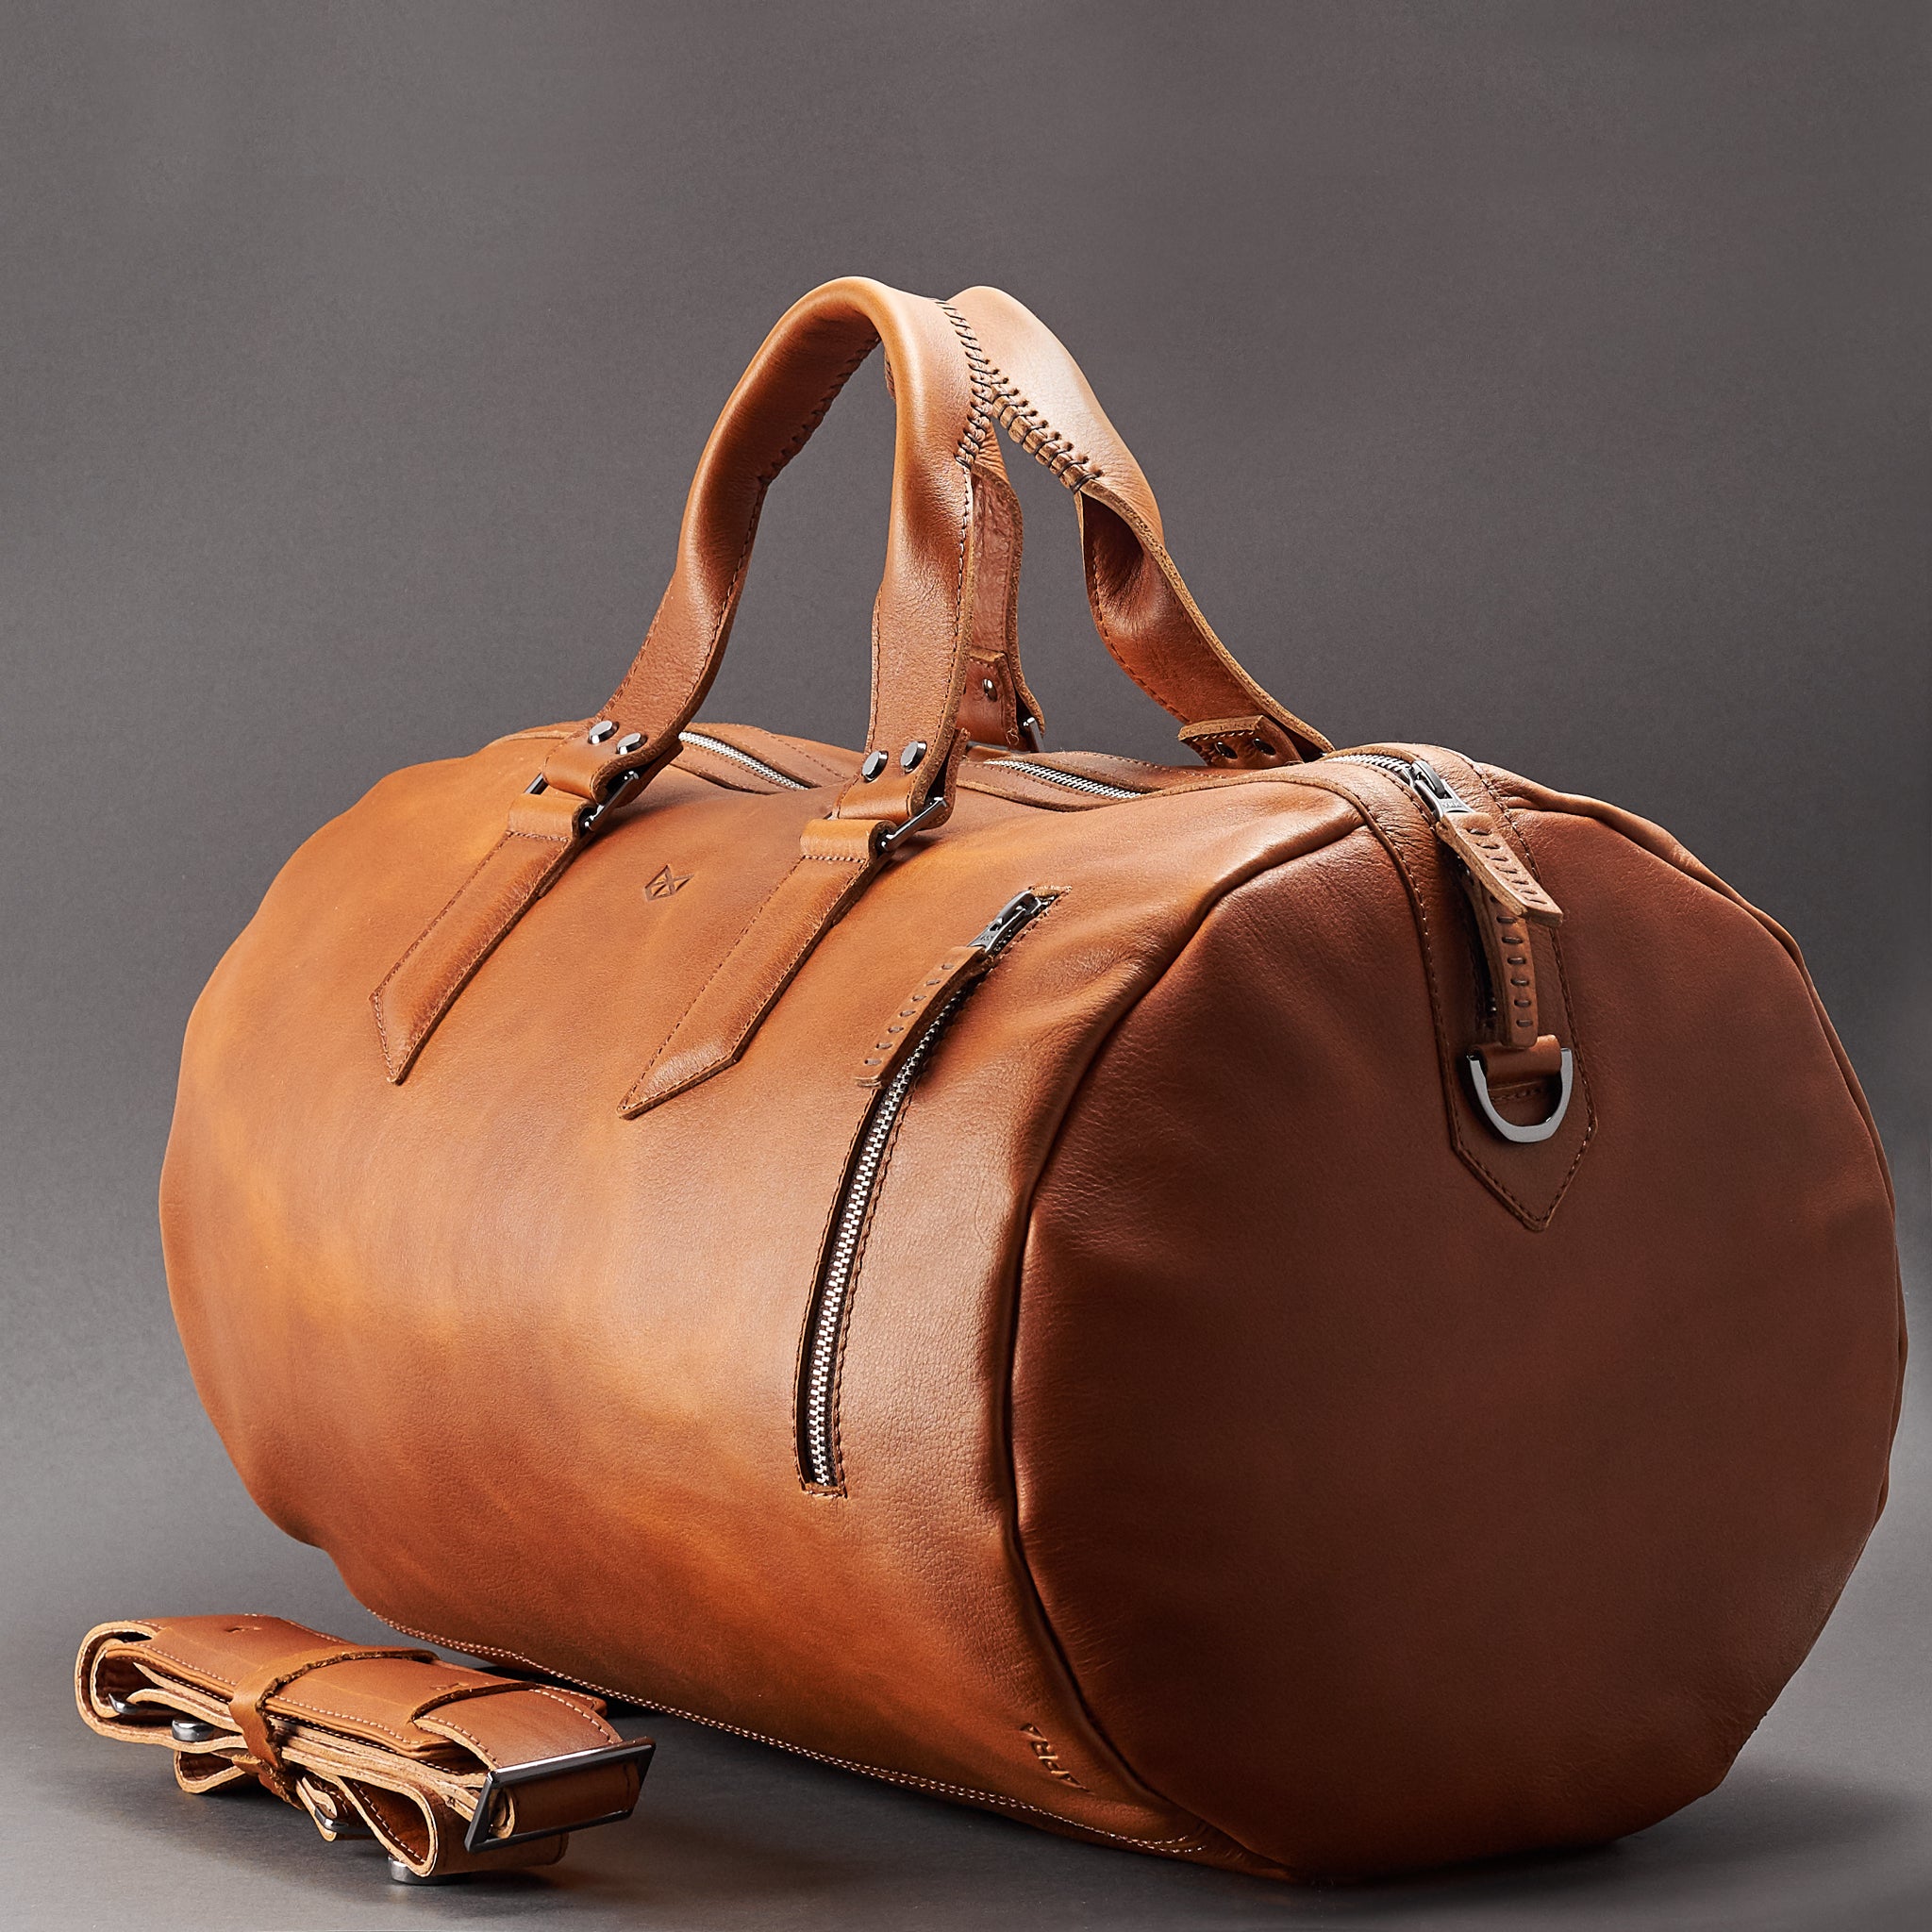 Leather duffle bag